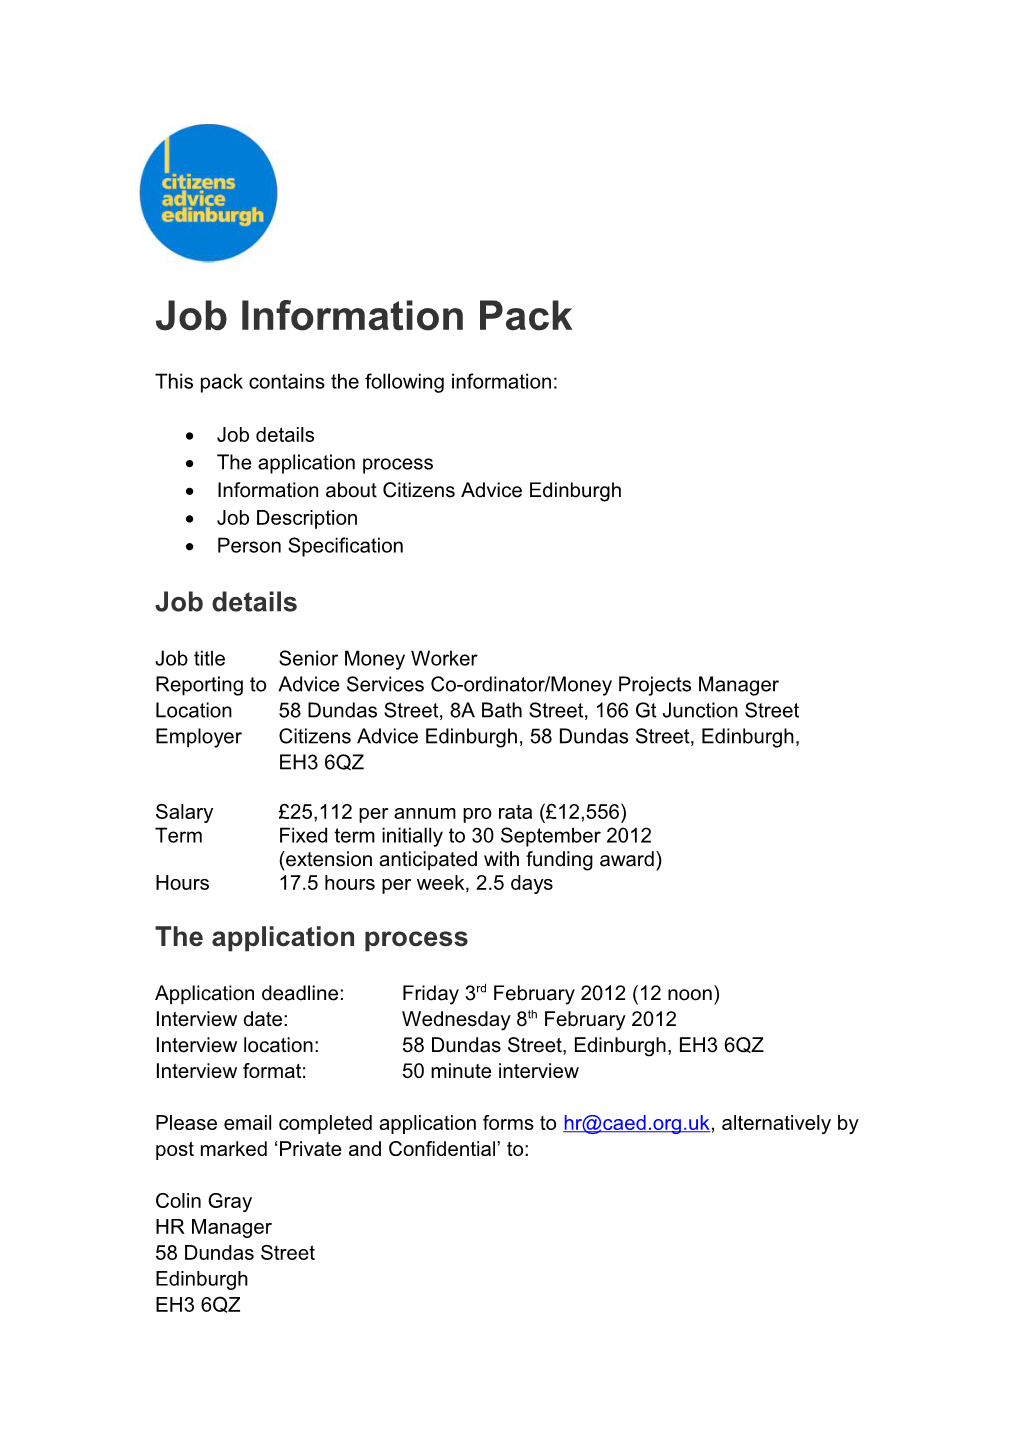 Job Information Pack s1